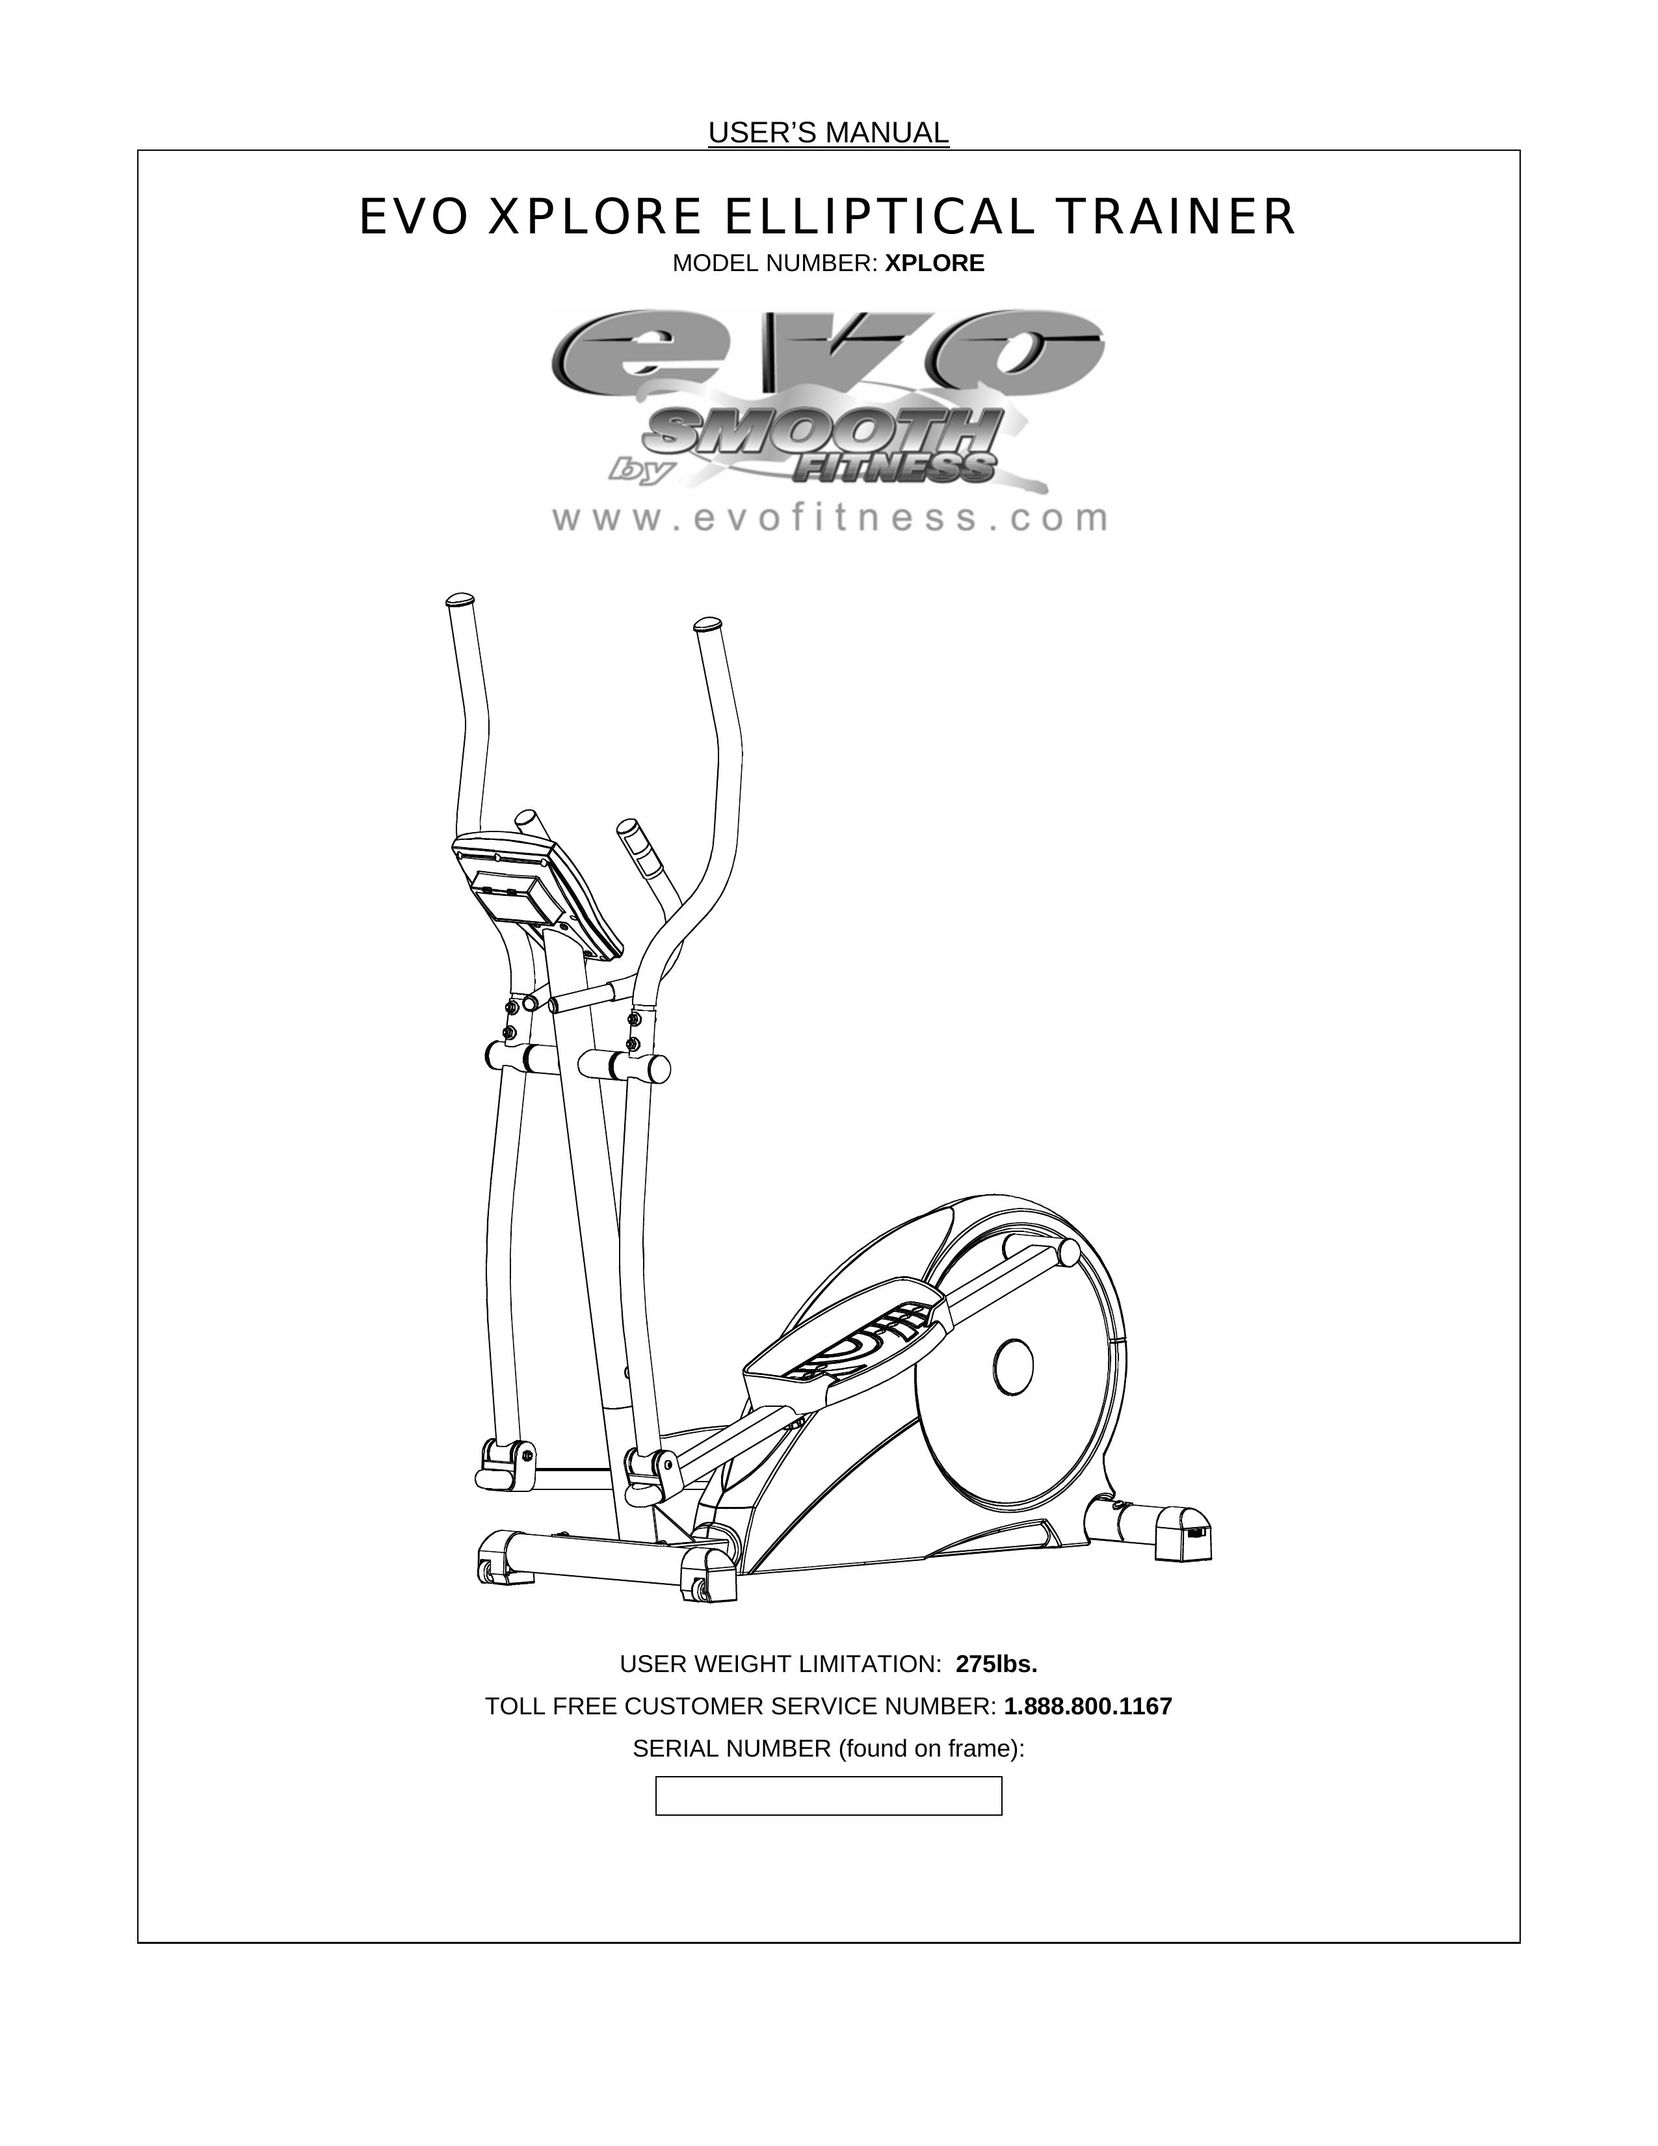 Evo Fitness XPLORE Elliptical Trainer User Manual